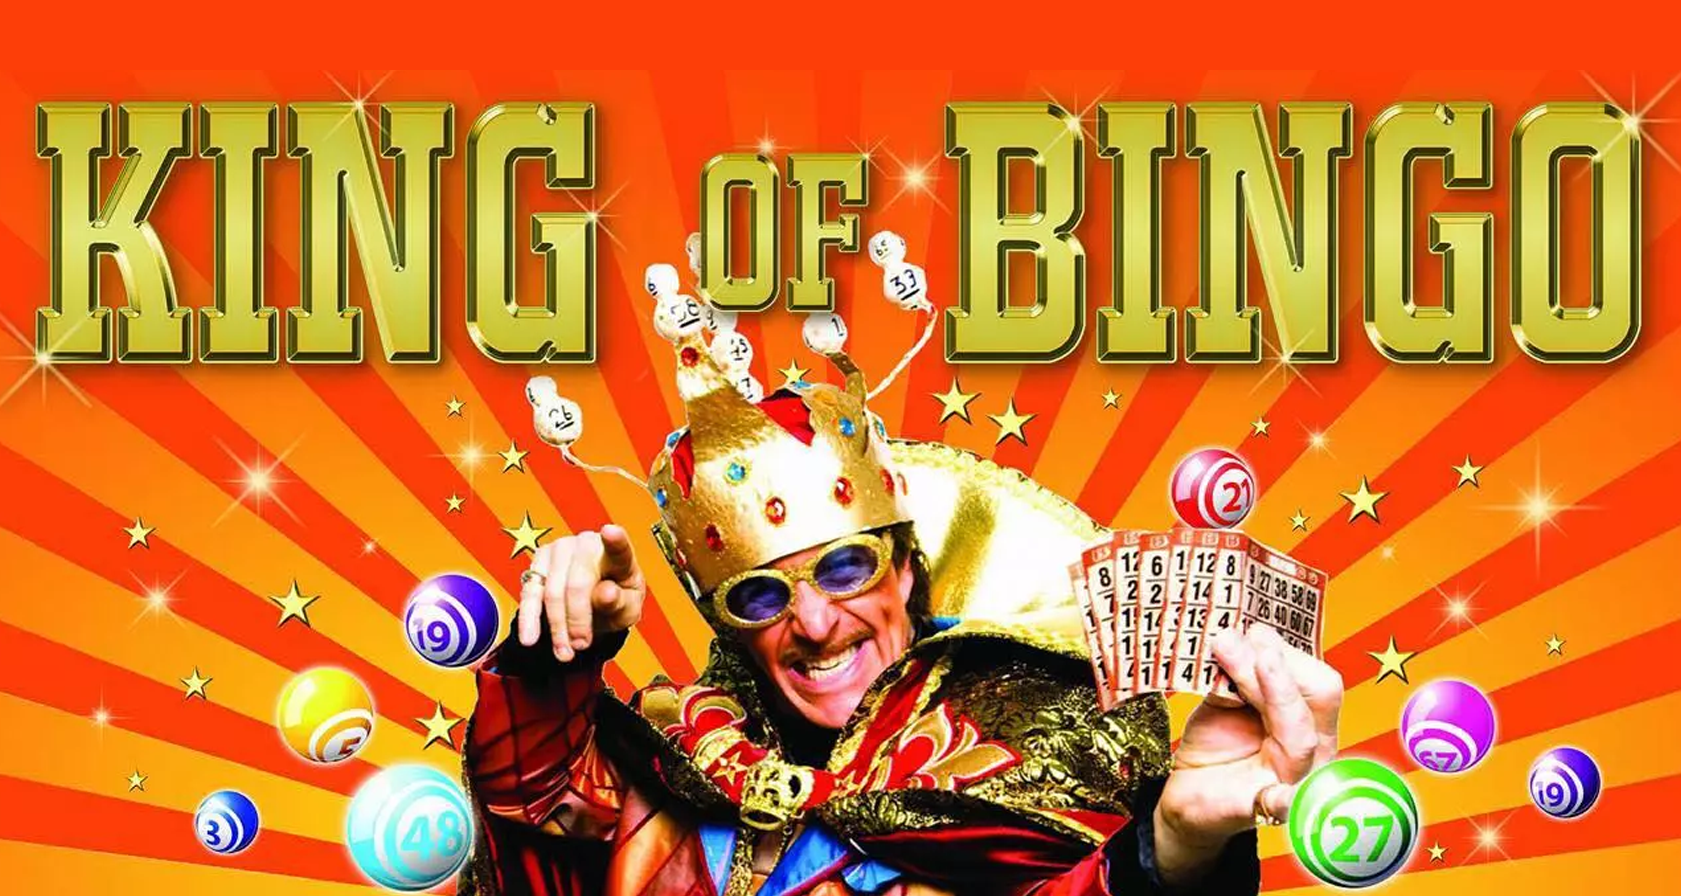 Teamuitje Arnhem: King of Bingo